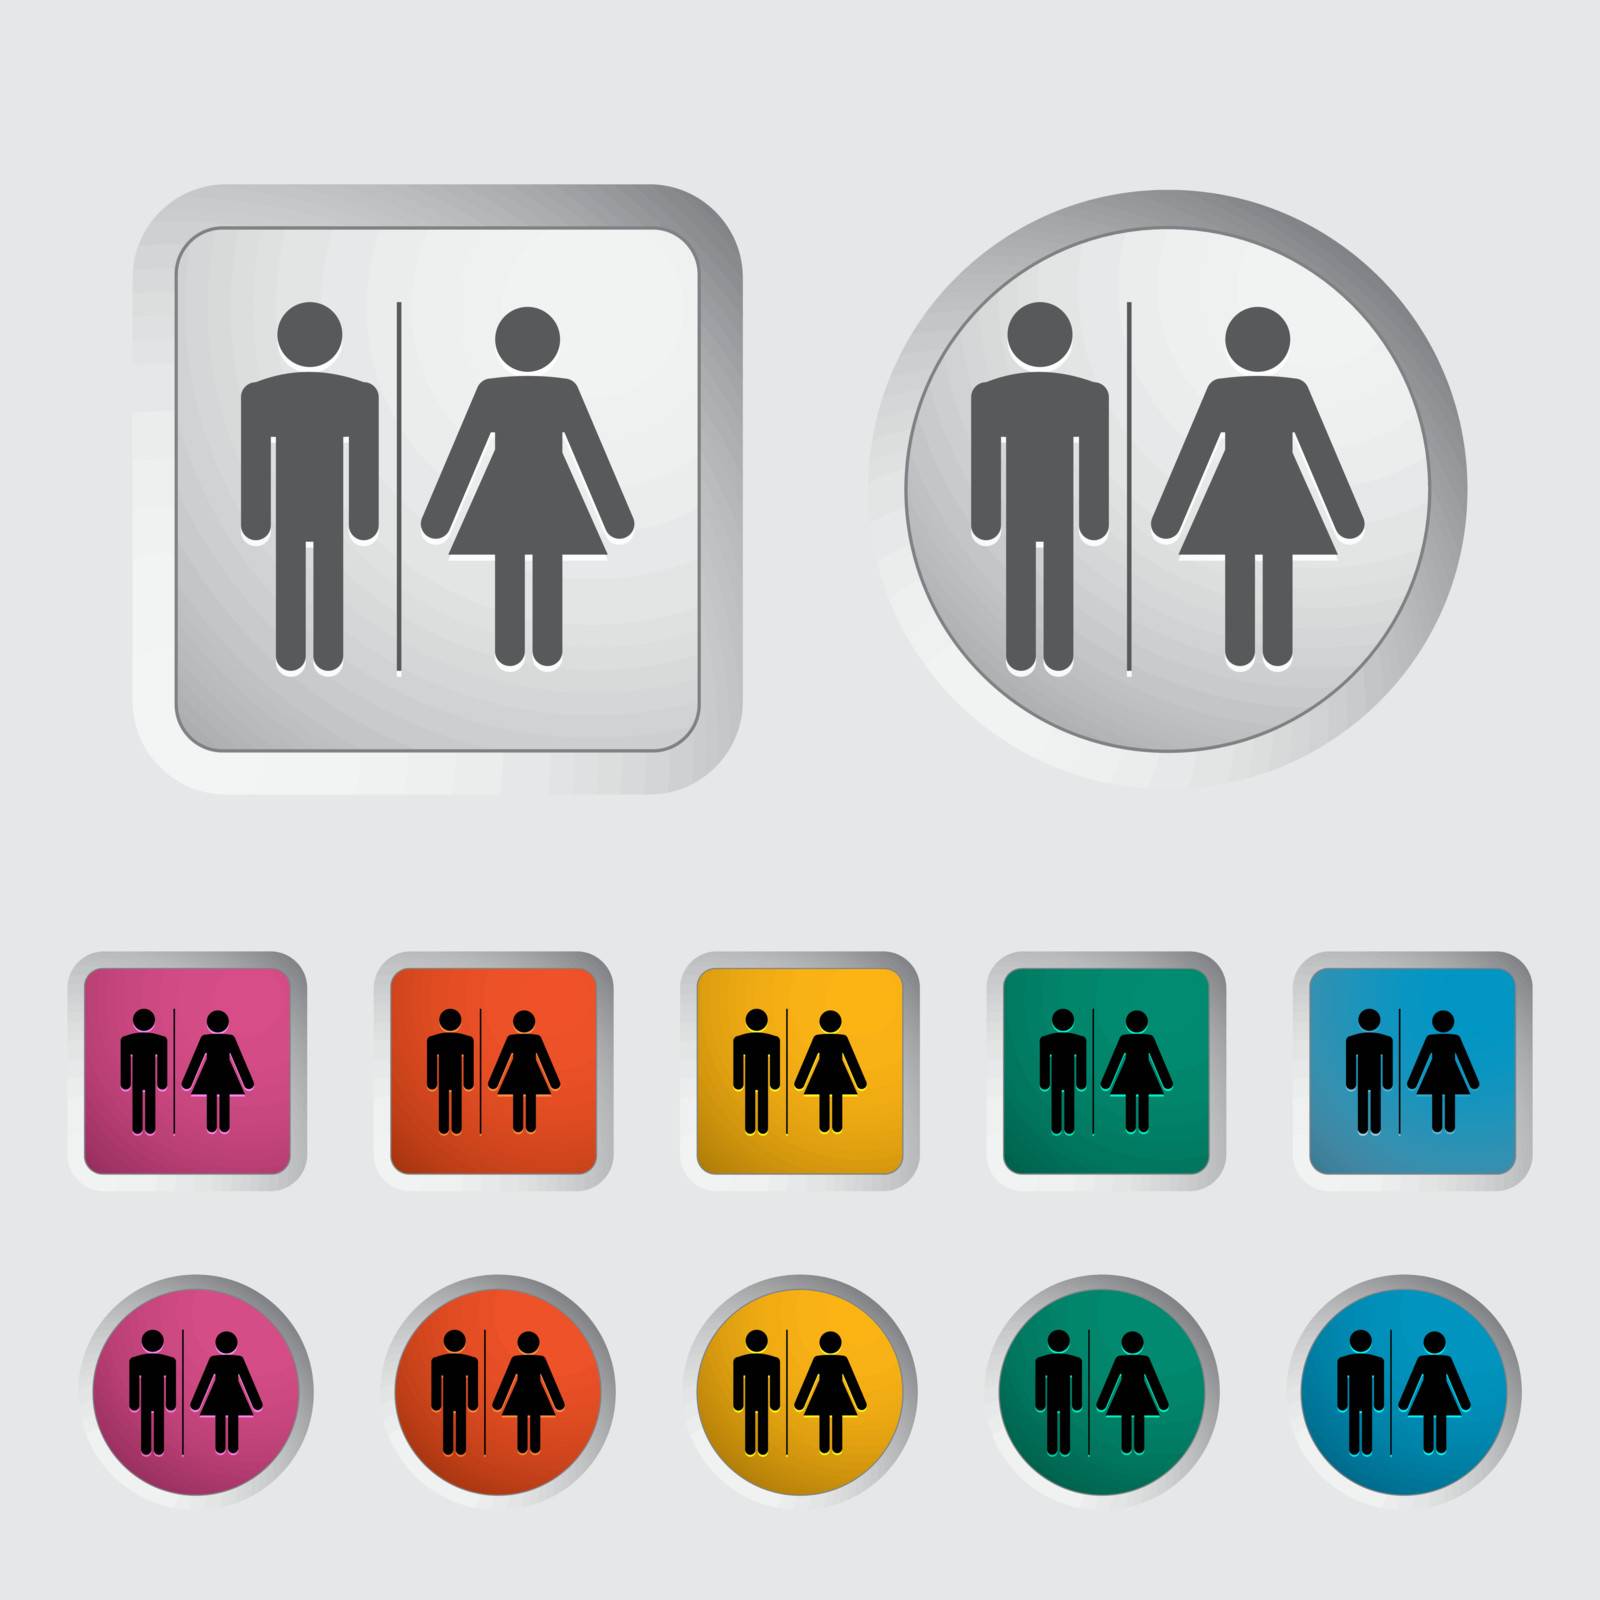 WC single icon. Vector illustration.